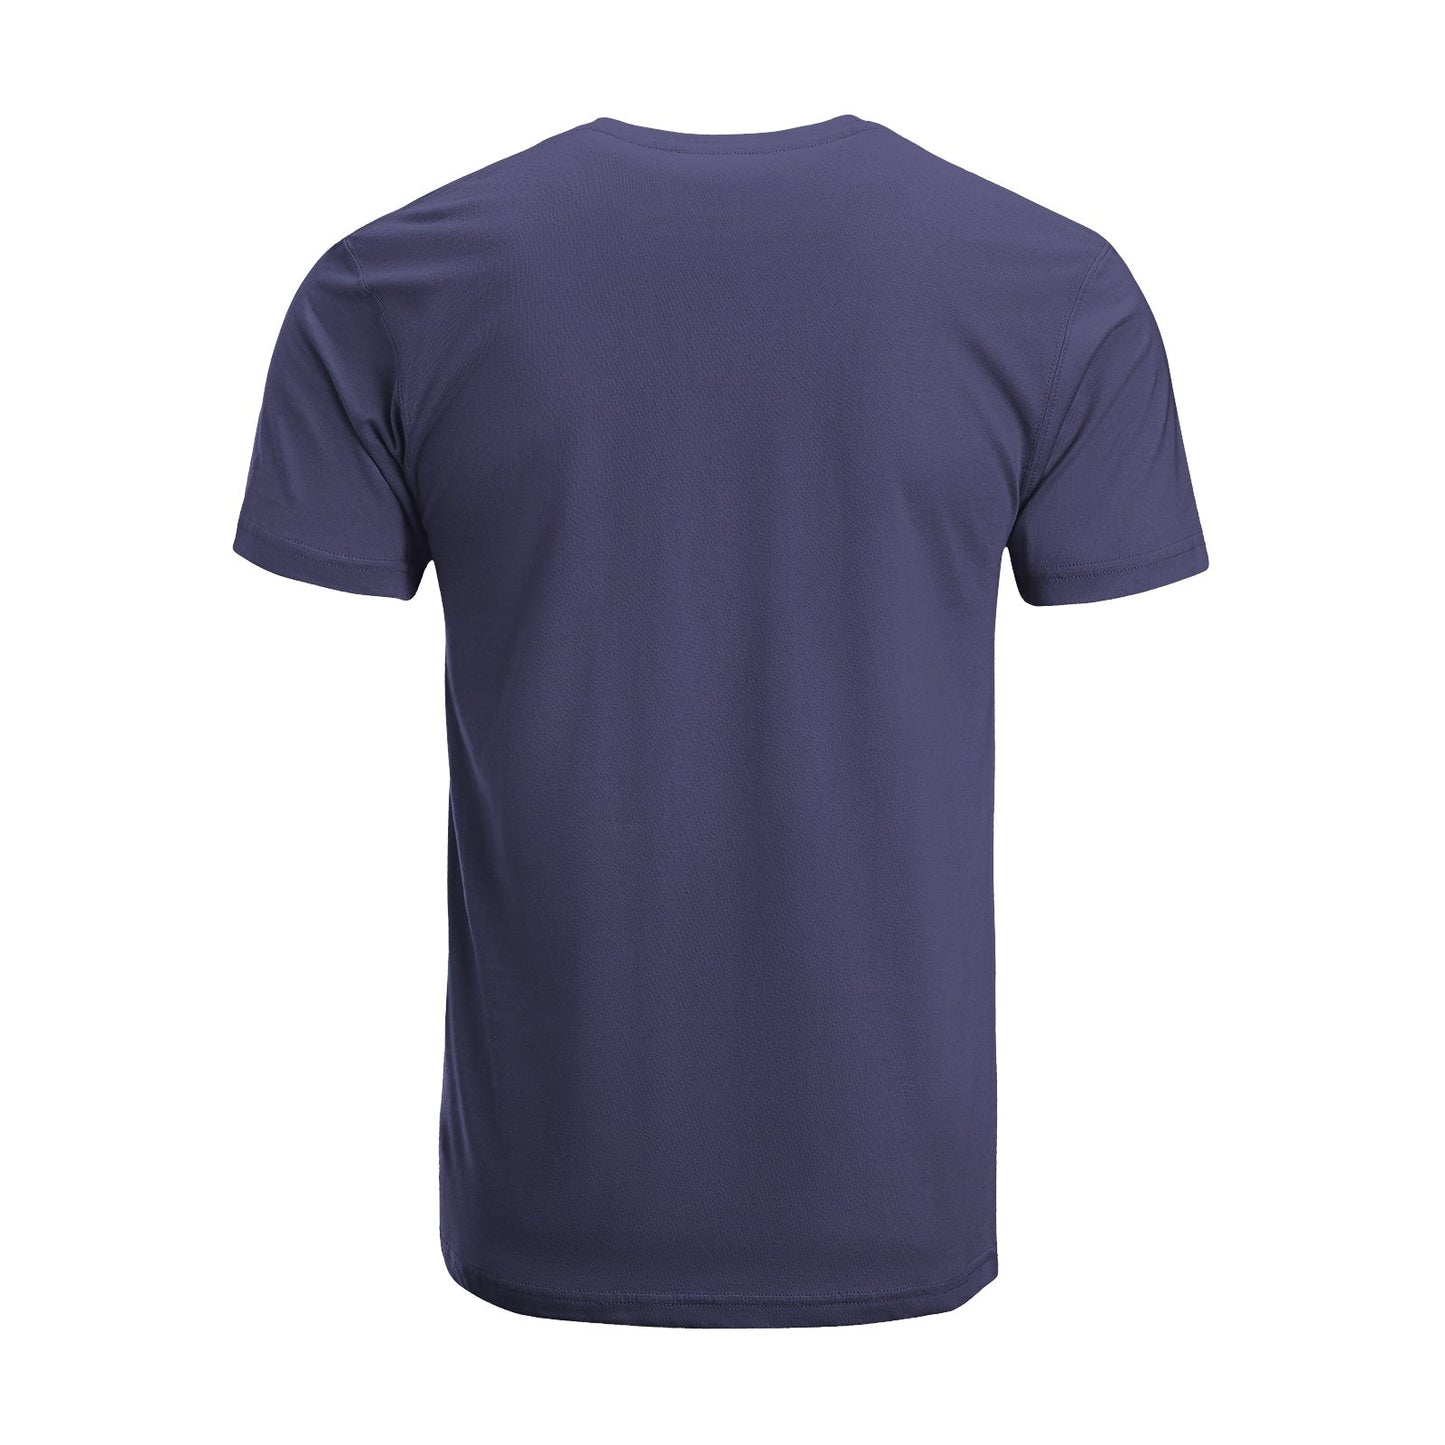 Unisex Short Sleeve Crew Neck Cotton Jersey T-Shirt VEGAN 17